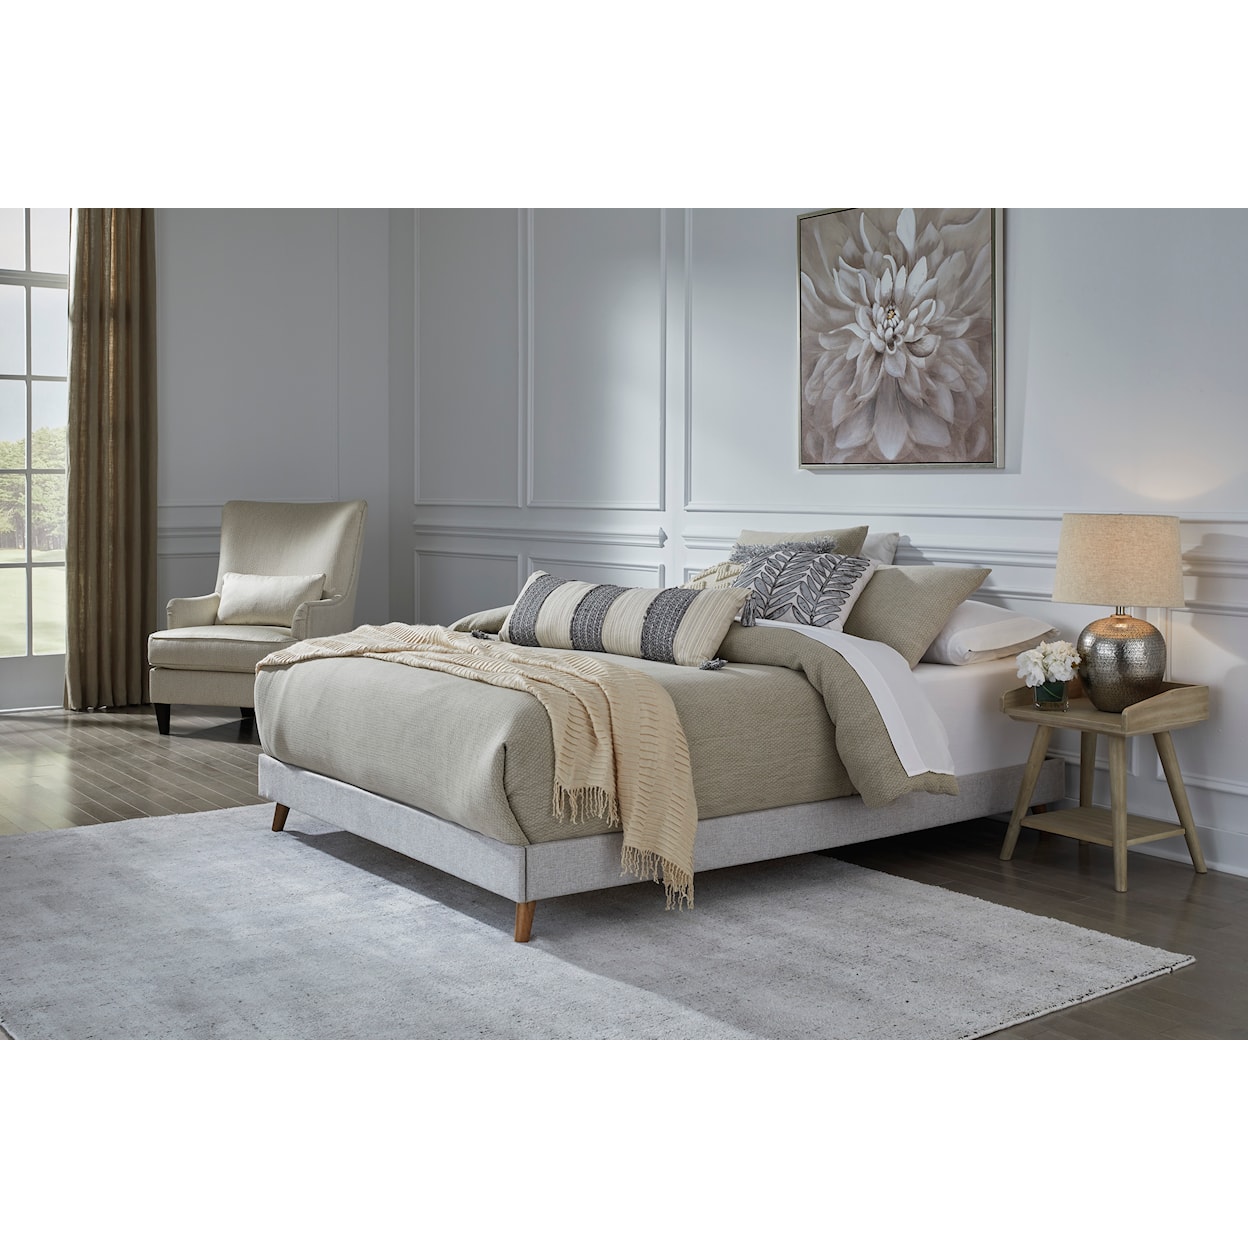 Ashley Furniture Signature Design Tannally Full Upholstered Platform Bed